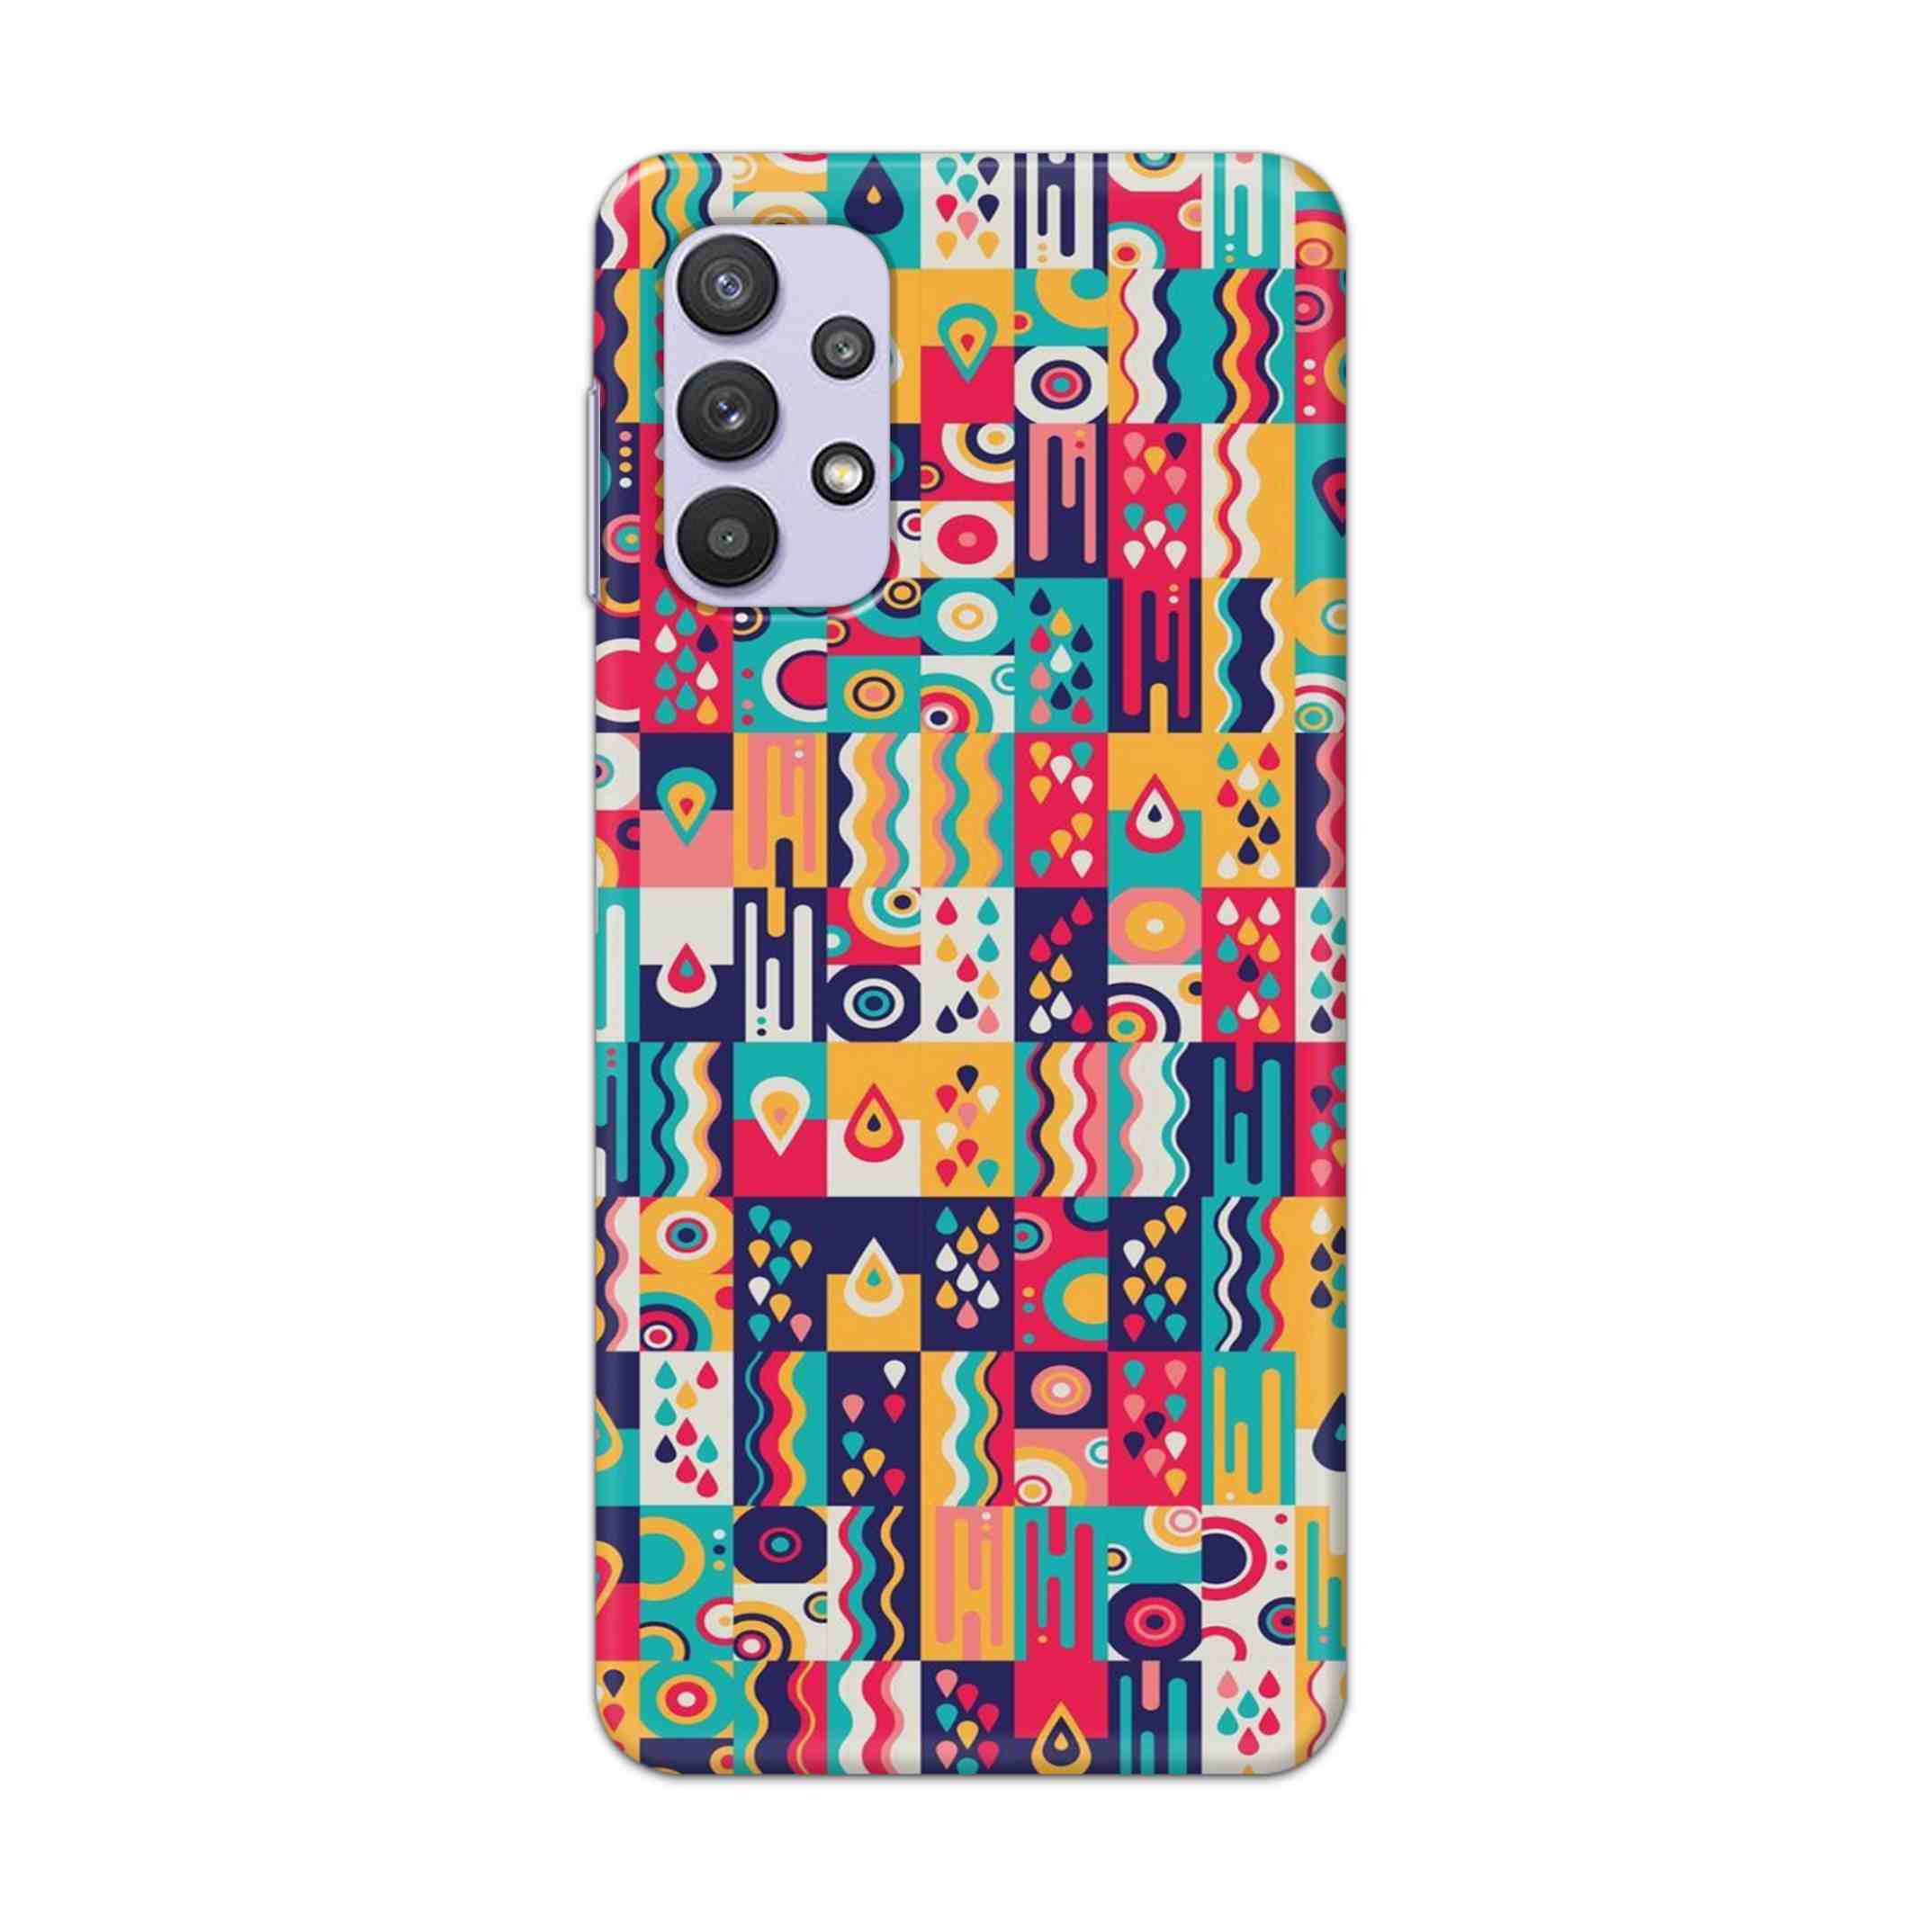 Buy Art Hard Back Mobile Phone Case Cover For Samsung A32 4G Online